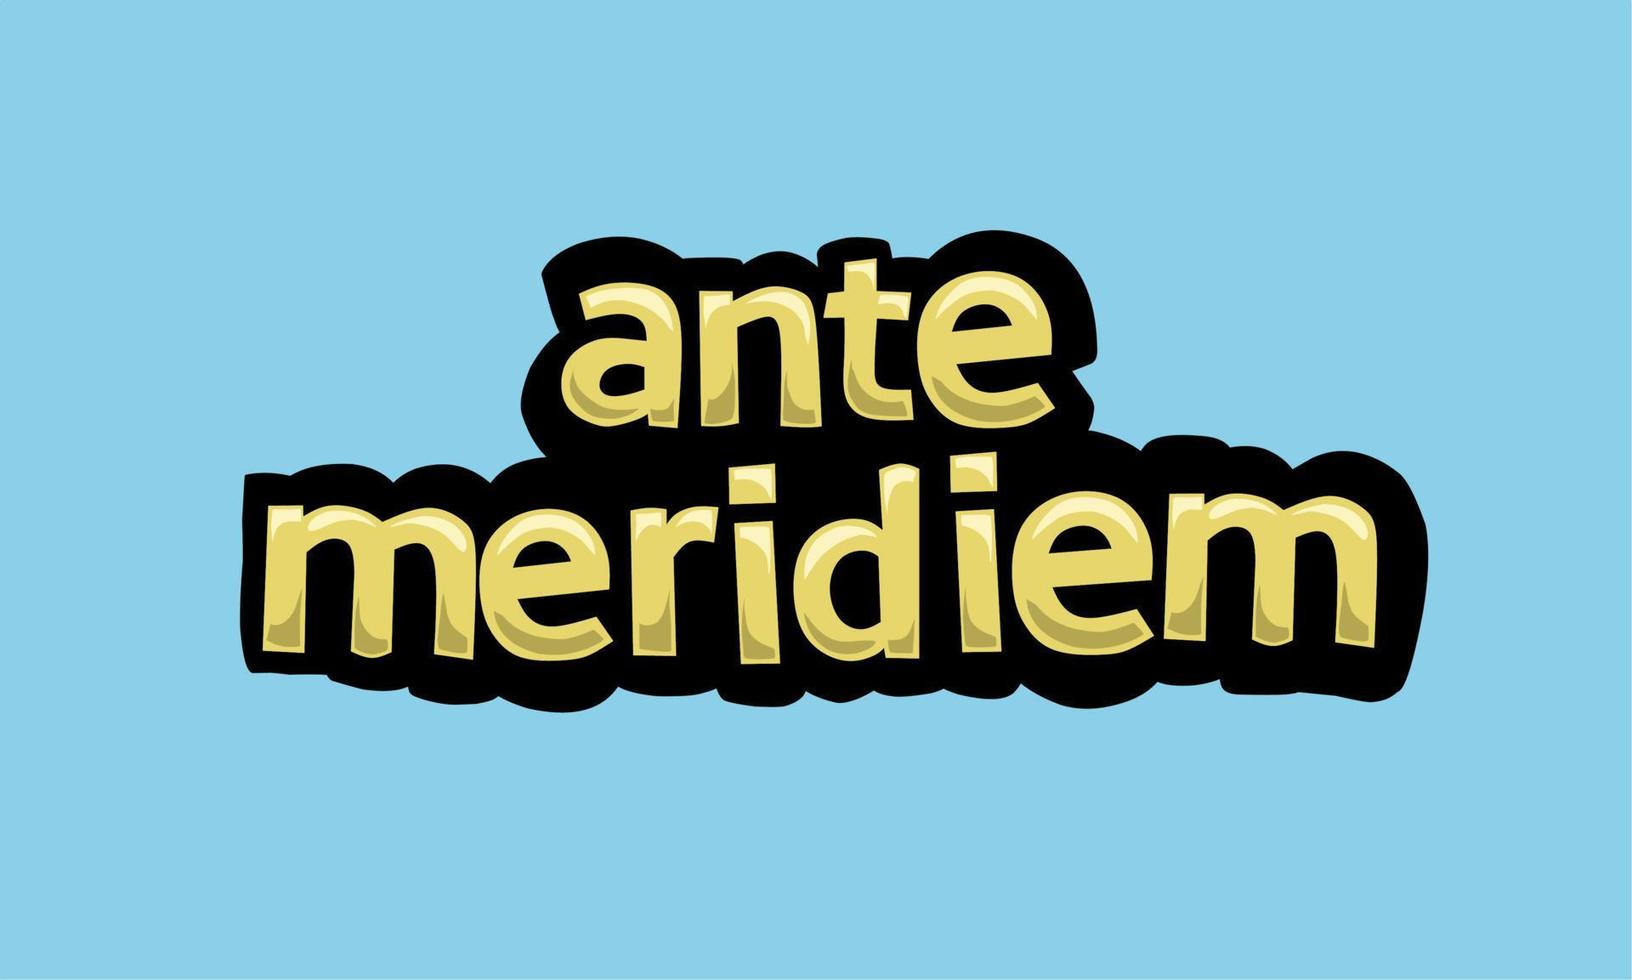 ANTE MERIDIEM writing vector design on a blue background